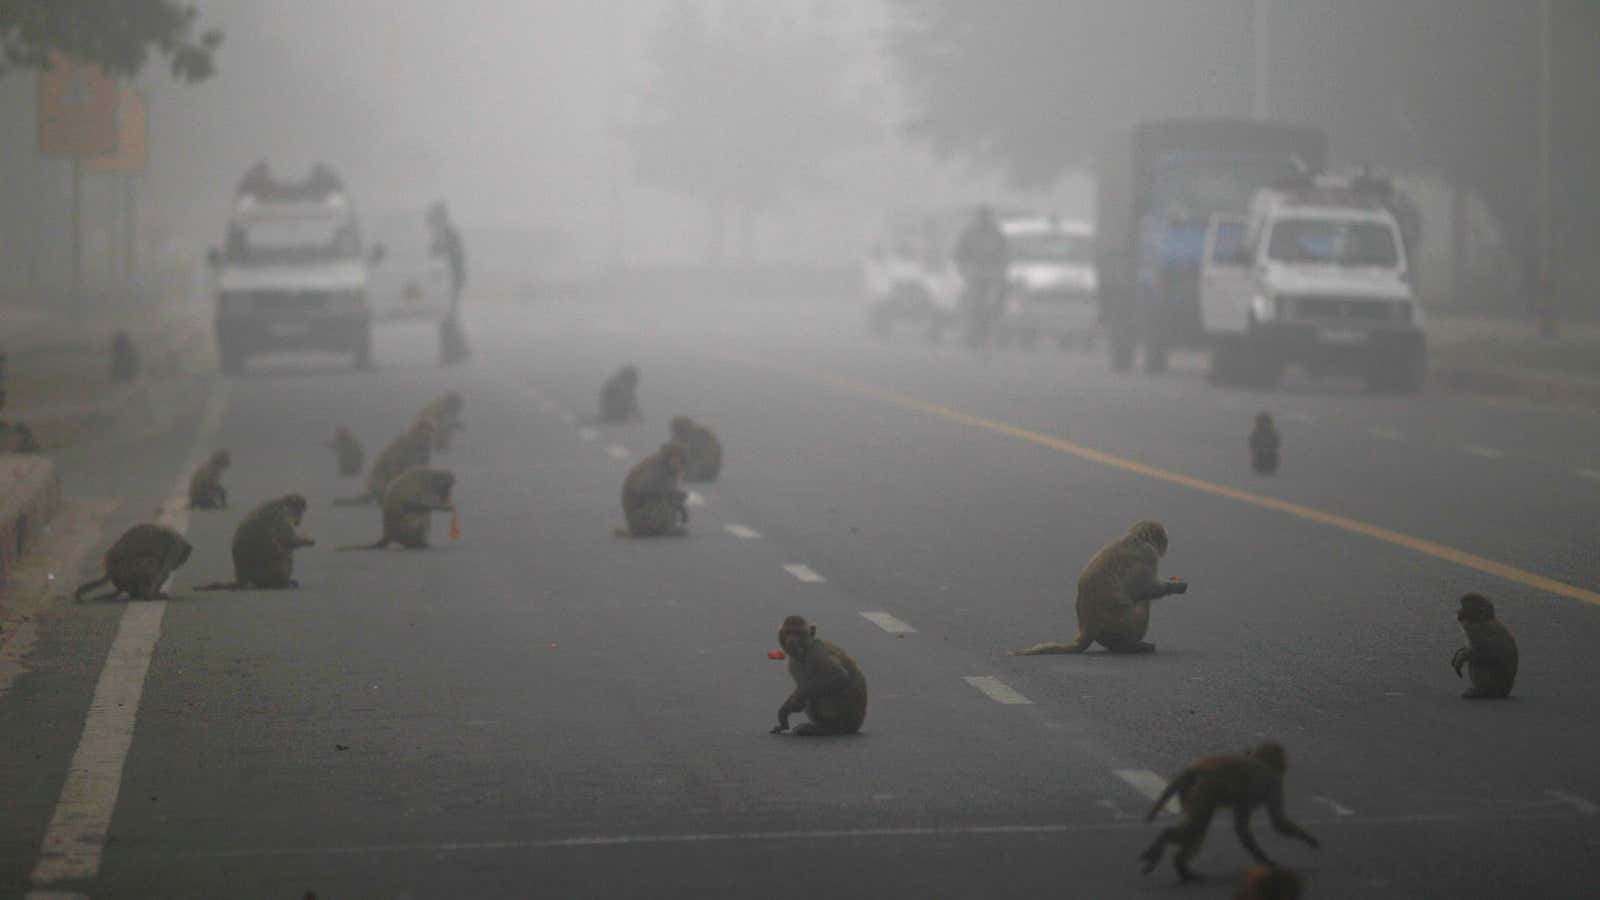 Devout Hindus feed monkeys, associated with Hindu God Hanuman, on the streets of Delhi.